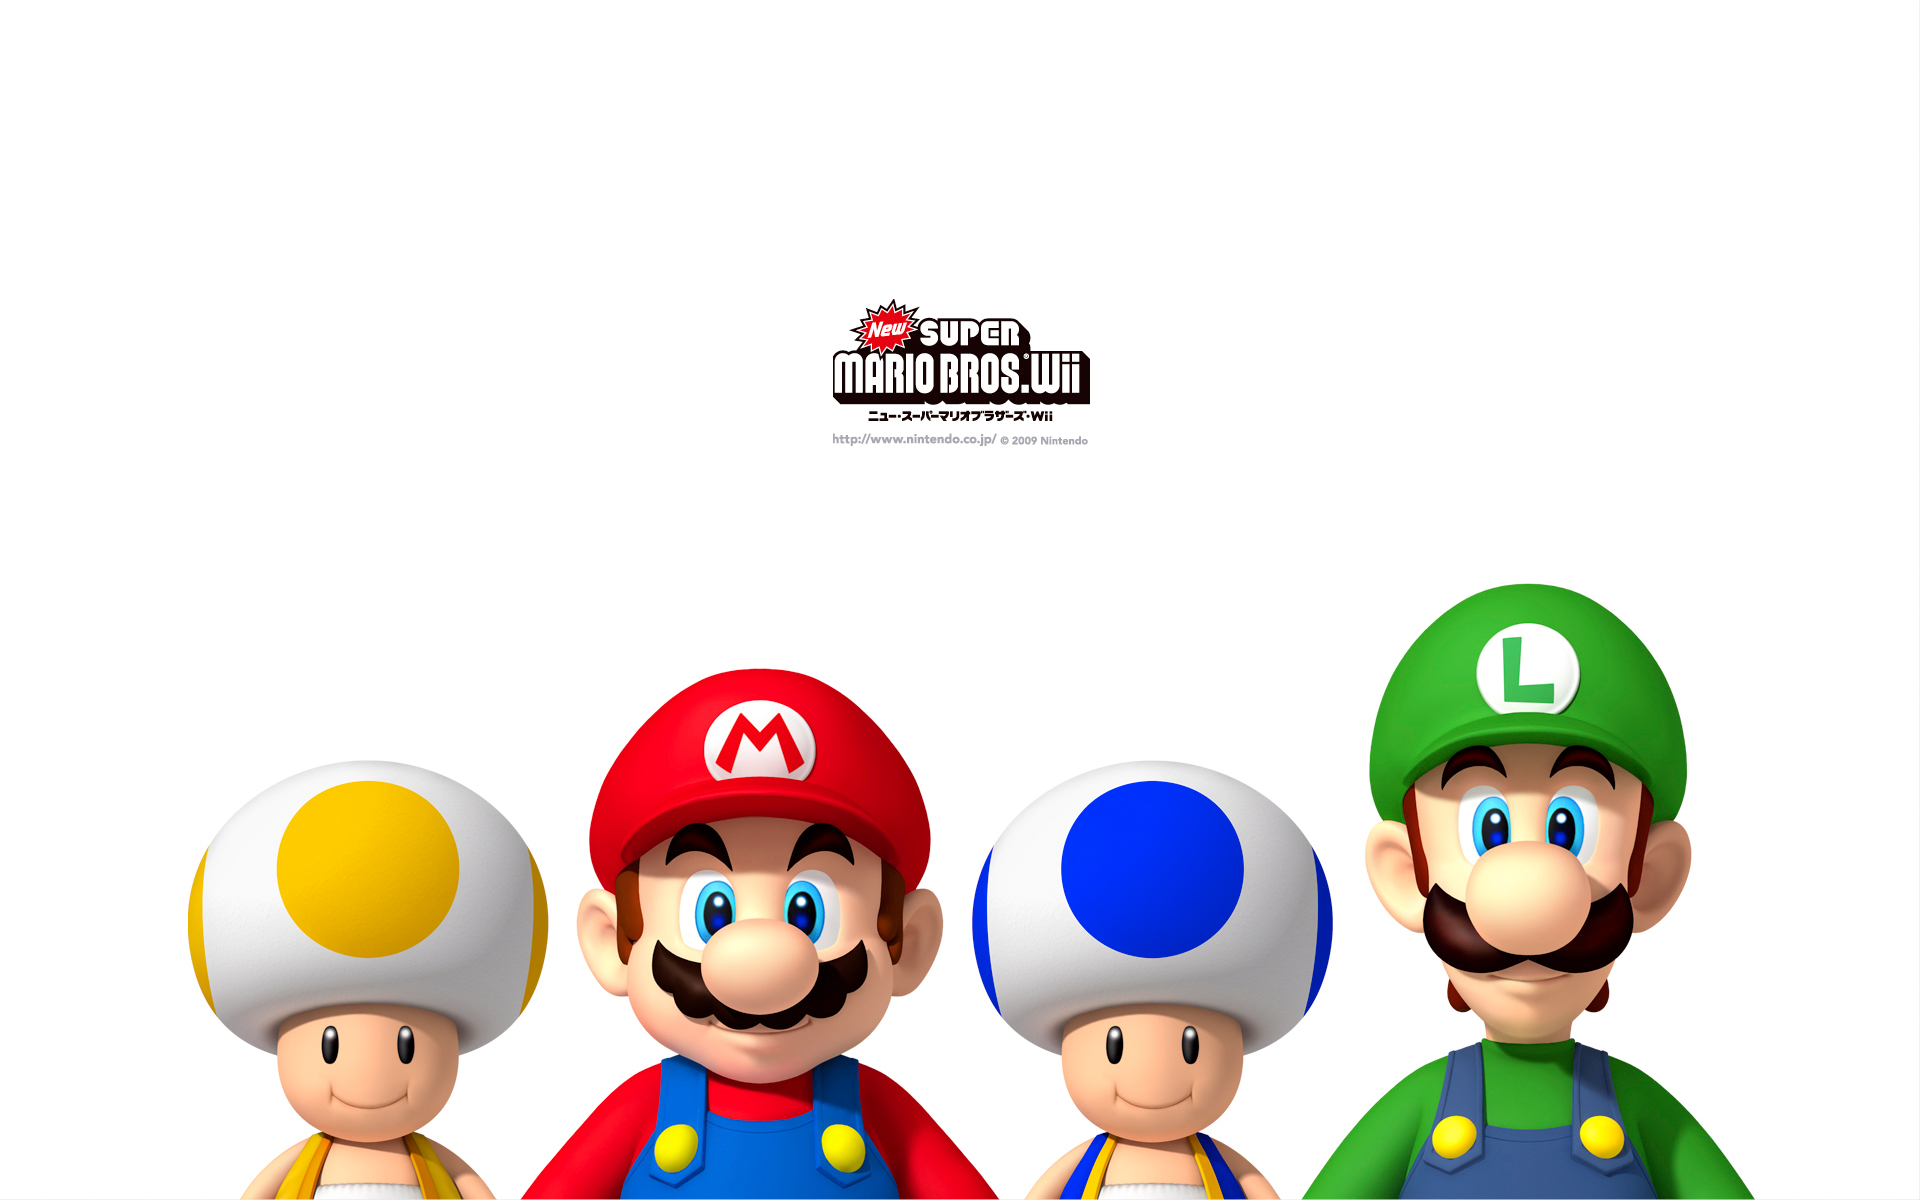 Tmk   Downloads   Images   New Super Mario Bros  Wii  Wii